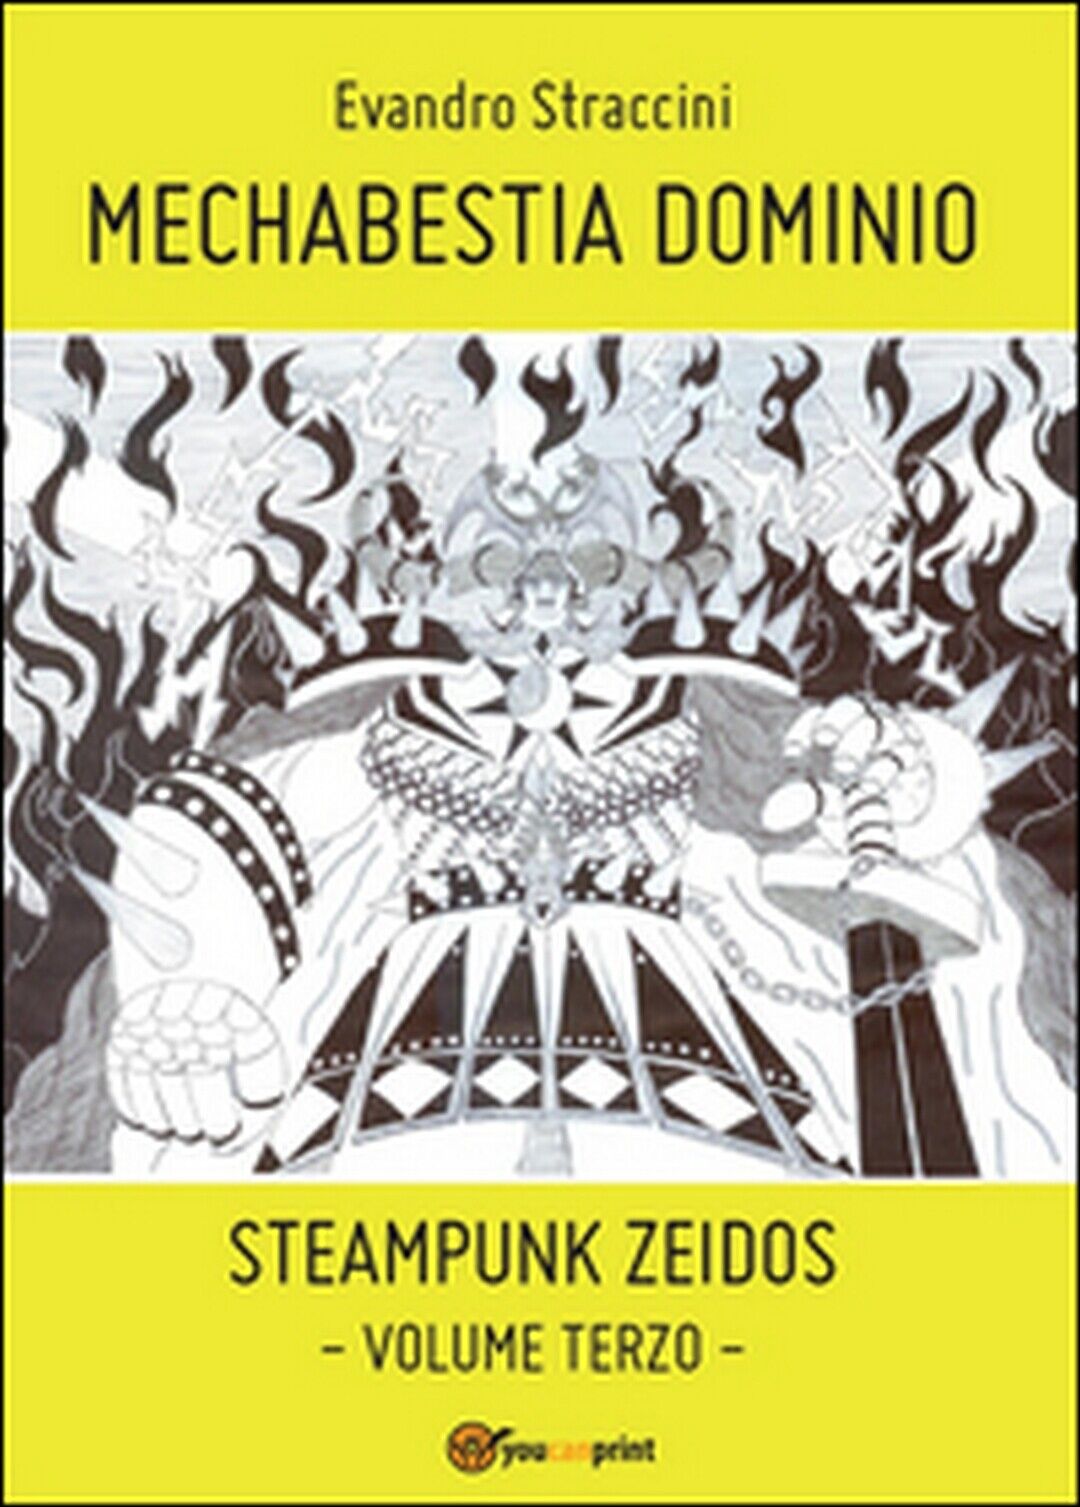 Mechabestia Dominio. Steampunk zeidos Vol.3, Evandro Straccini,  2015,  Youcanp. libro usato